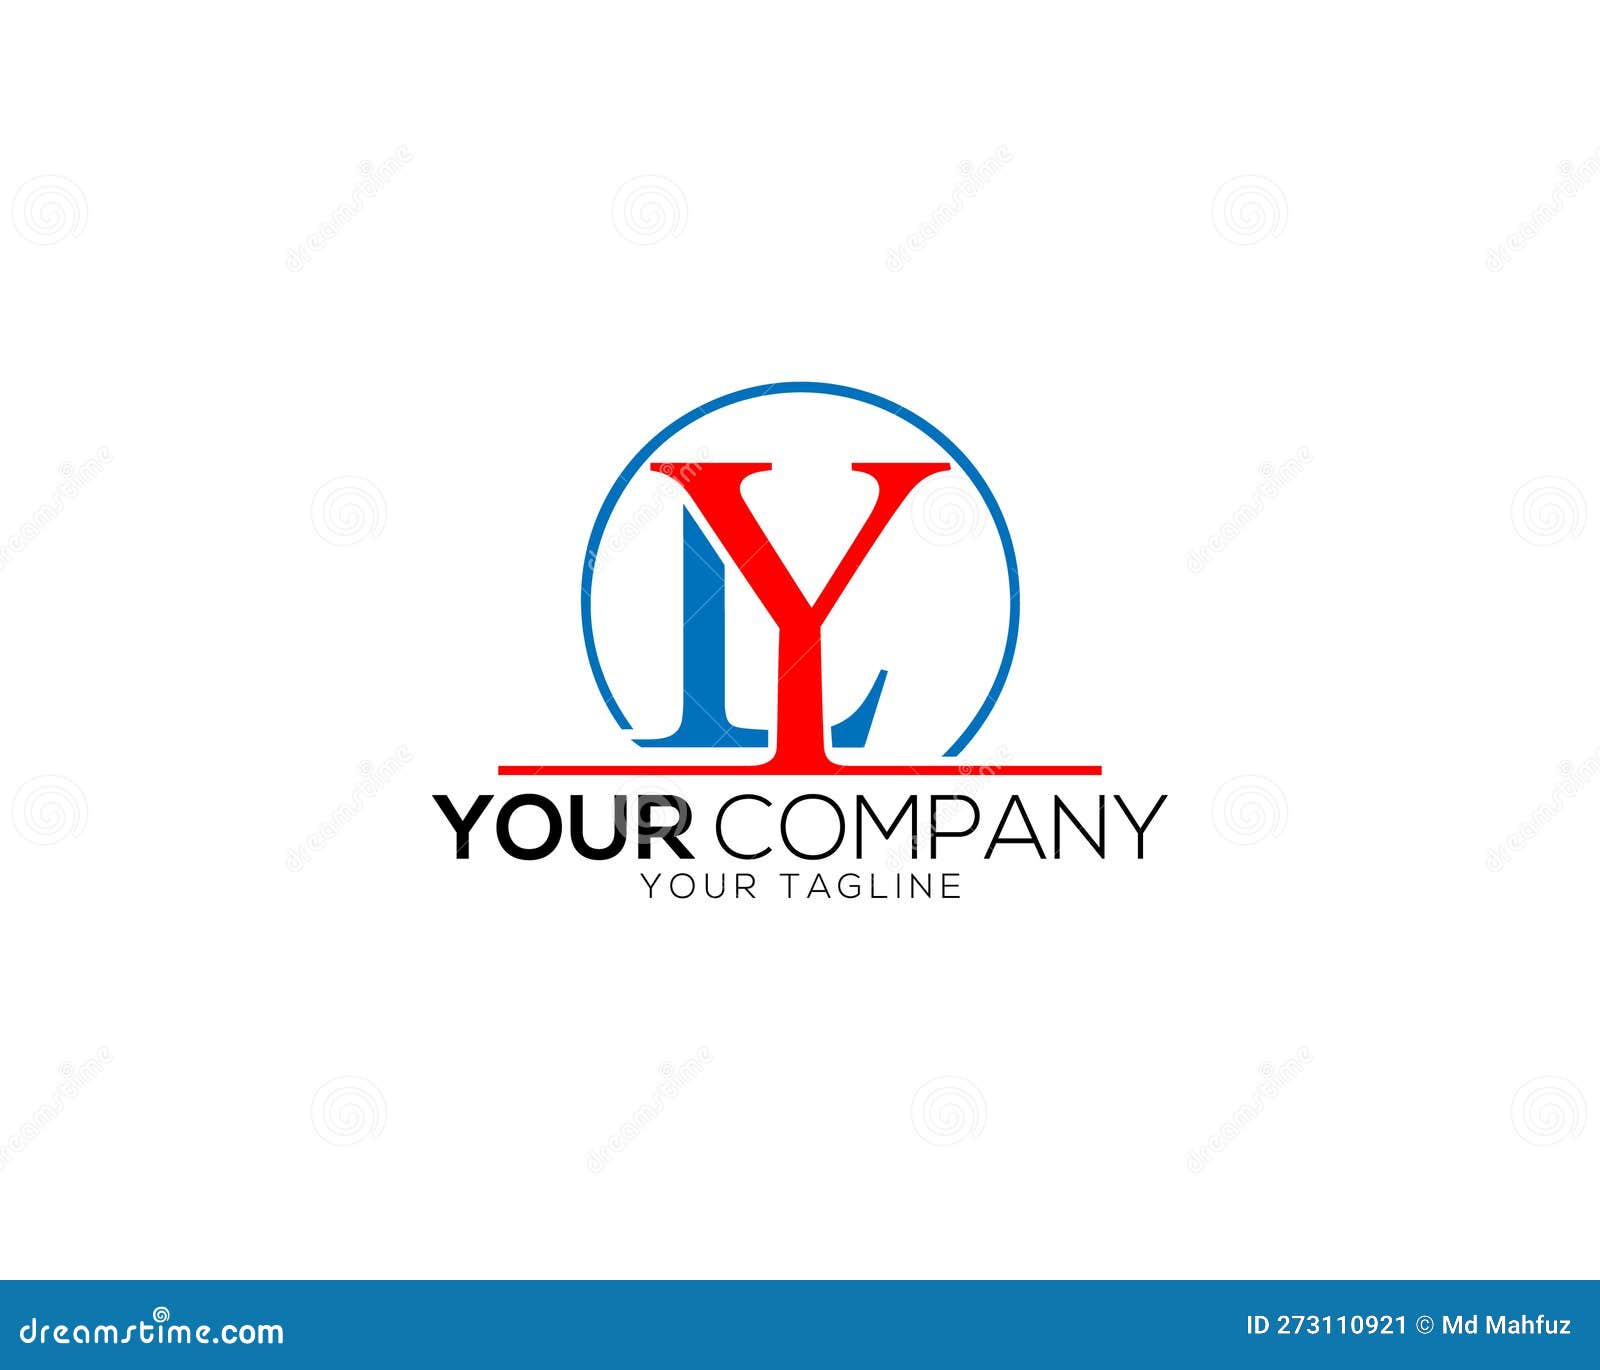 Premium Vector  Initial letter yl logo design template